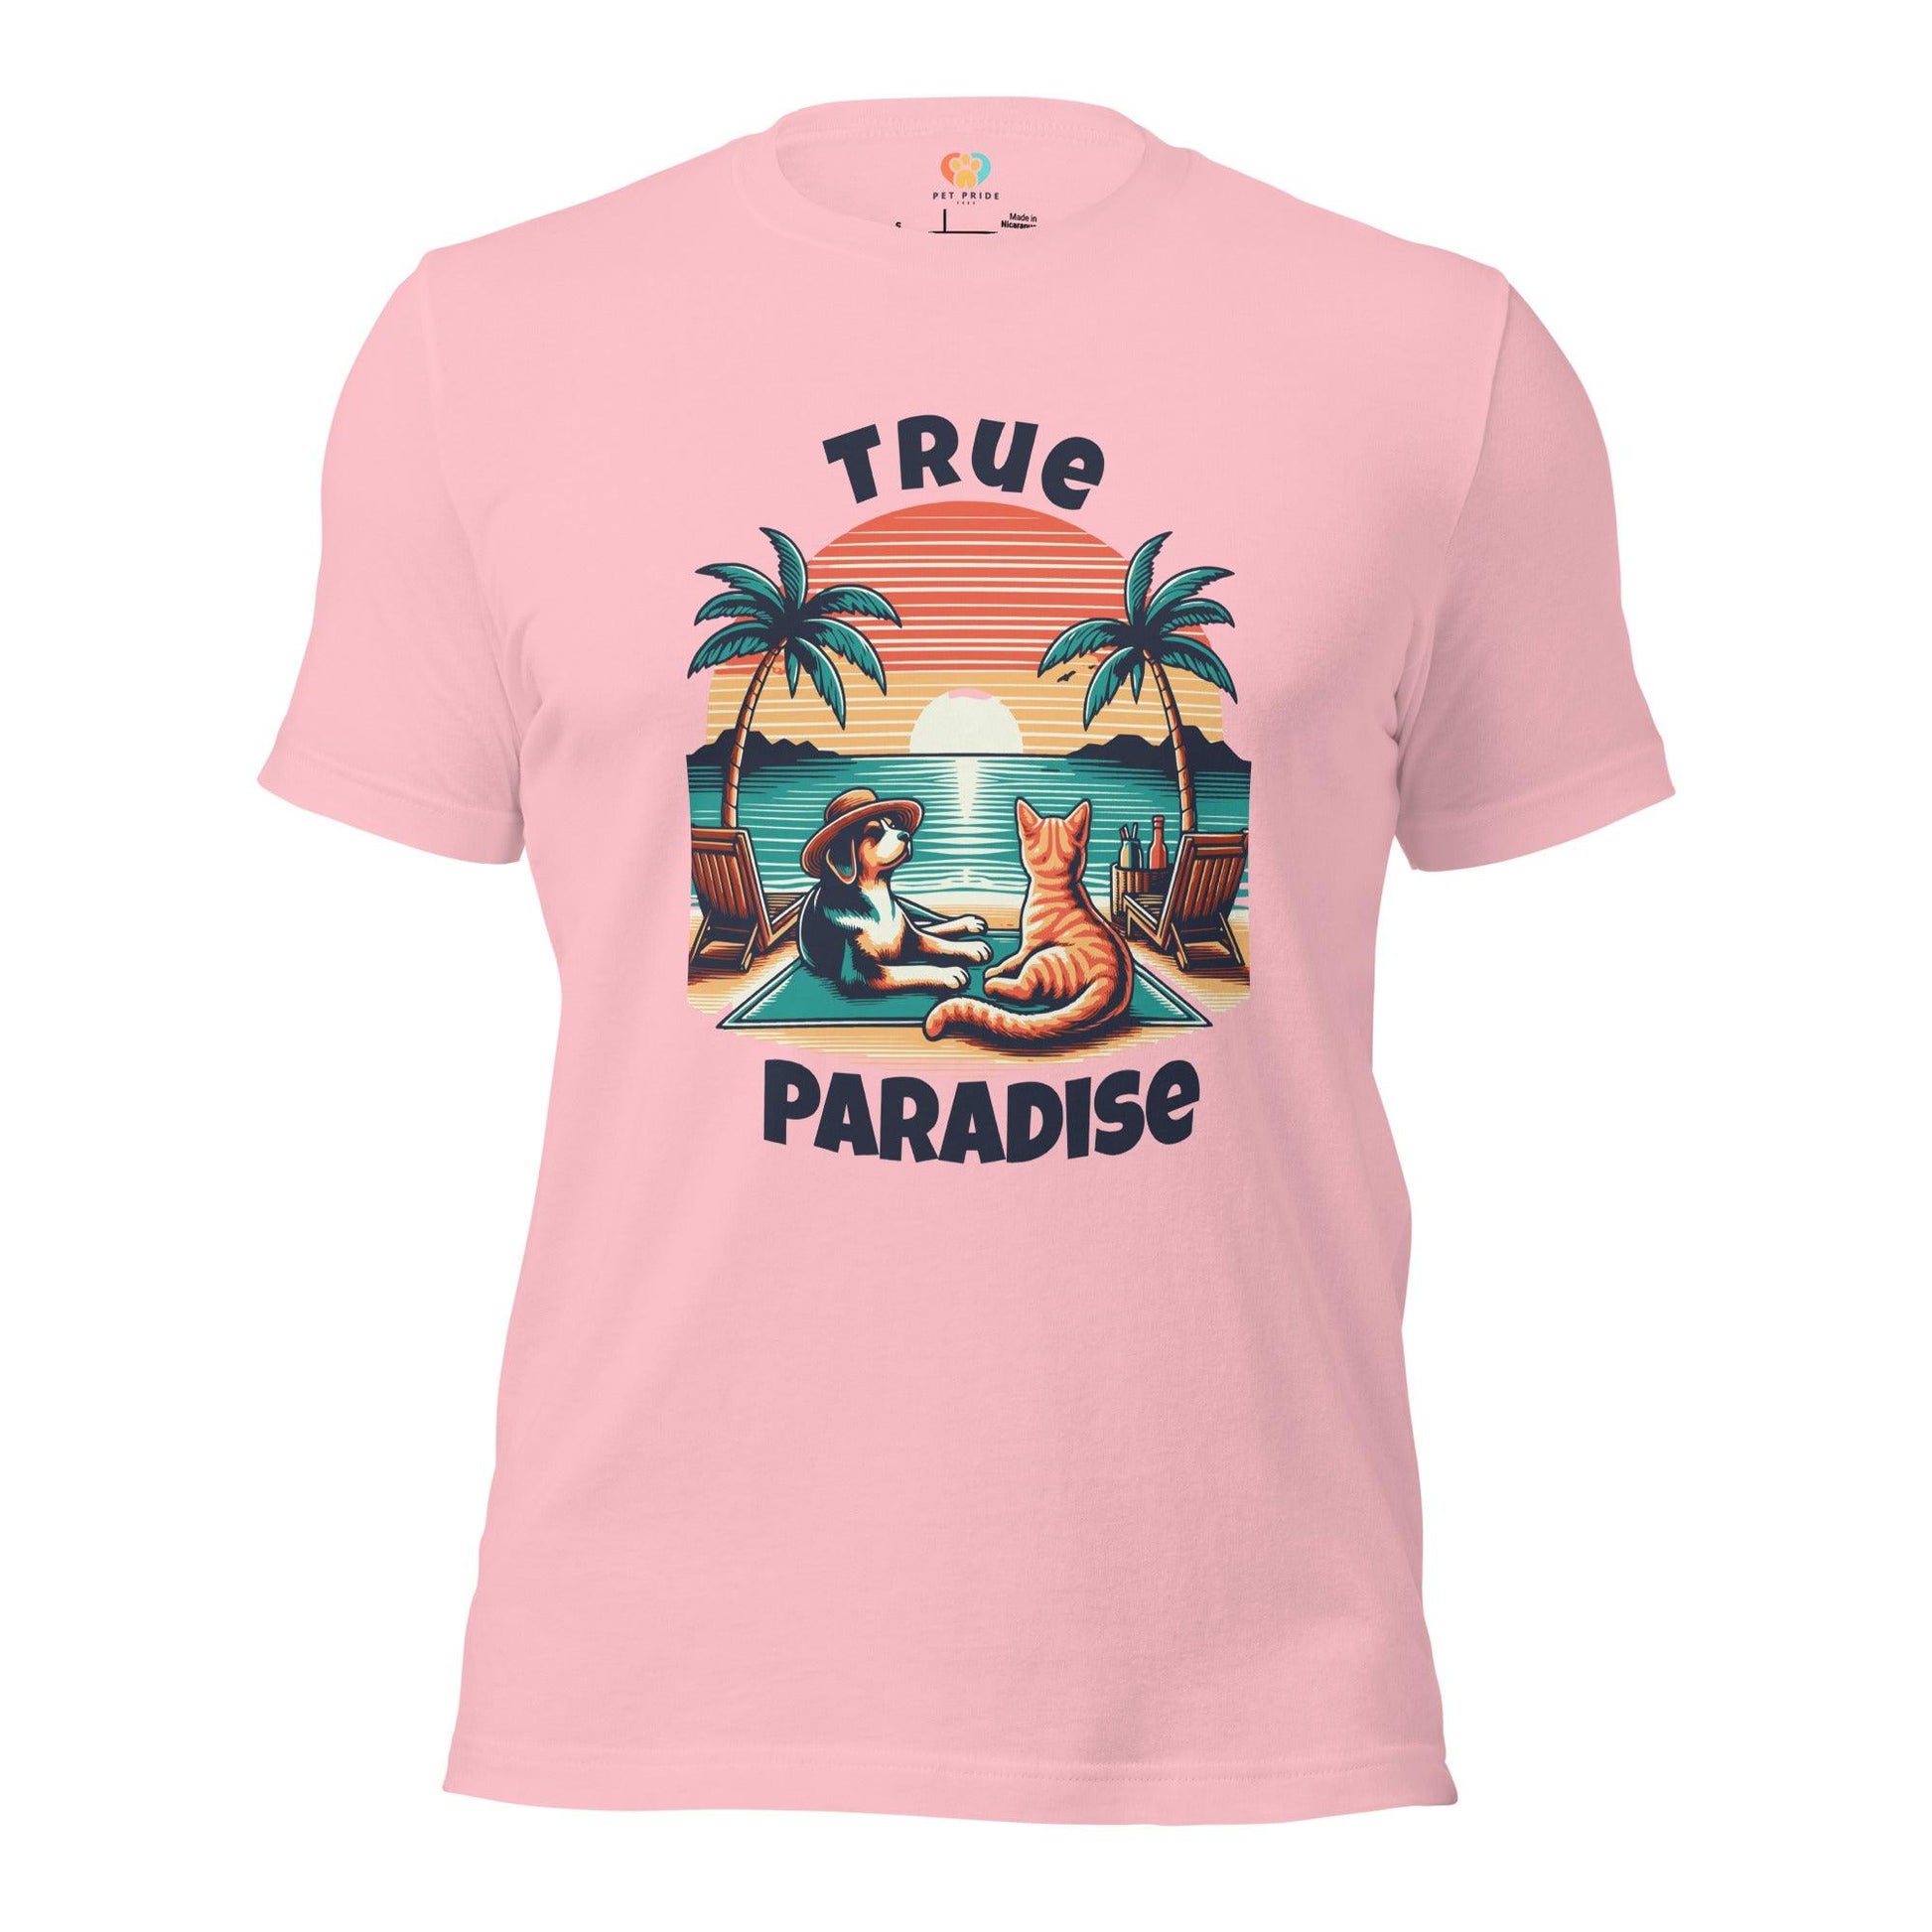 True Paradise Crew Neck Tee - Pet Pride Tees